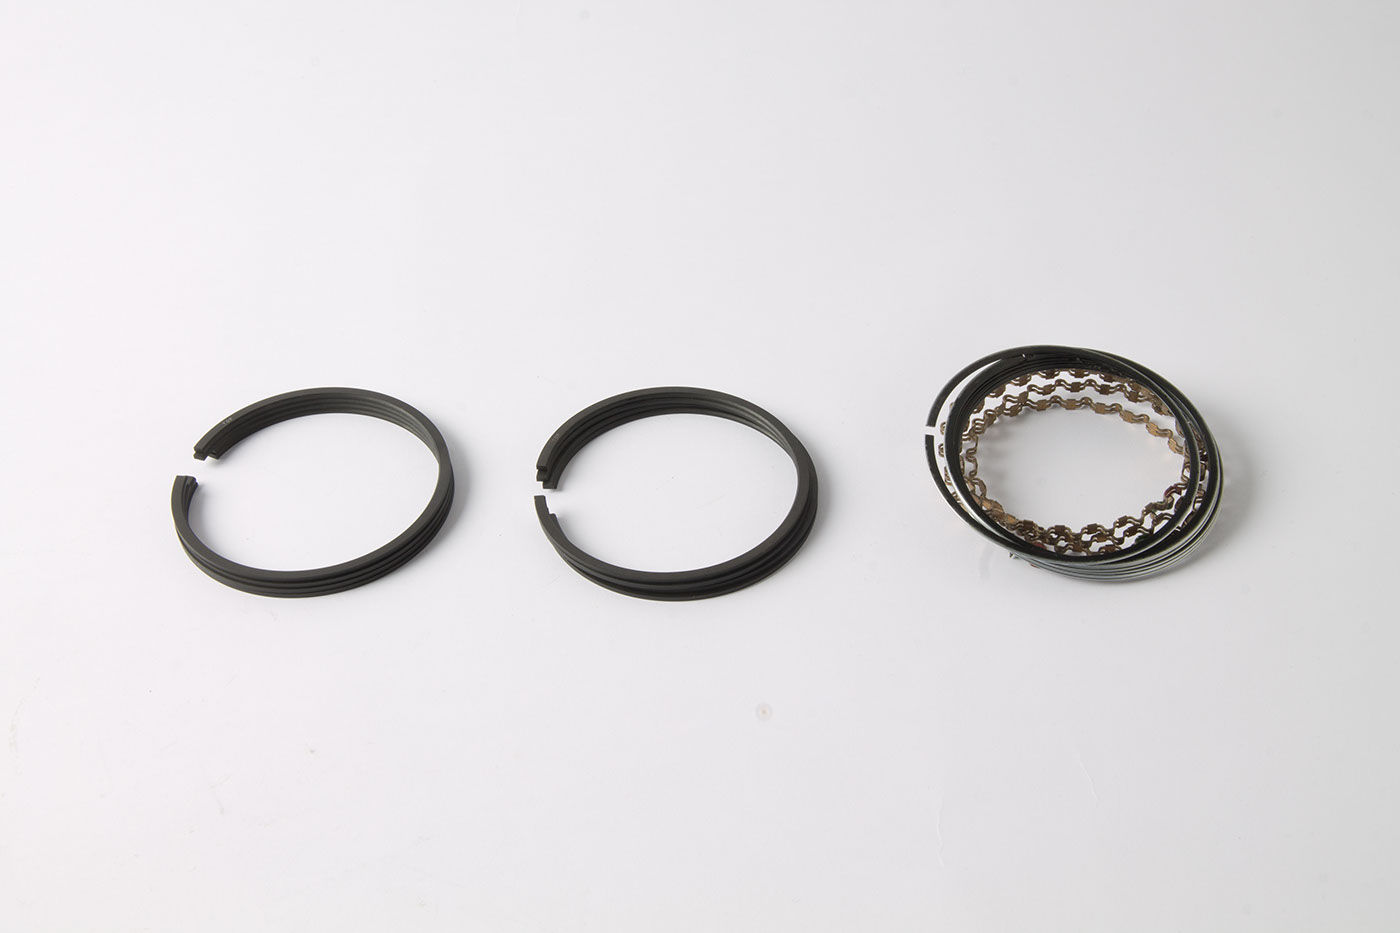 Satz Kolbenringe
Piston ring set
Set de segments de pistons
K